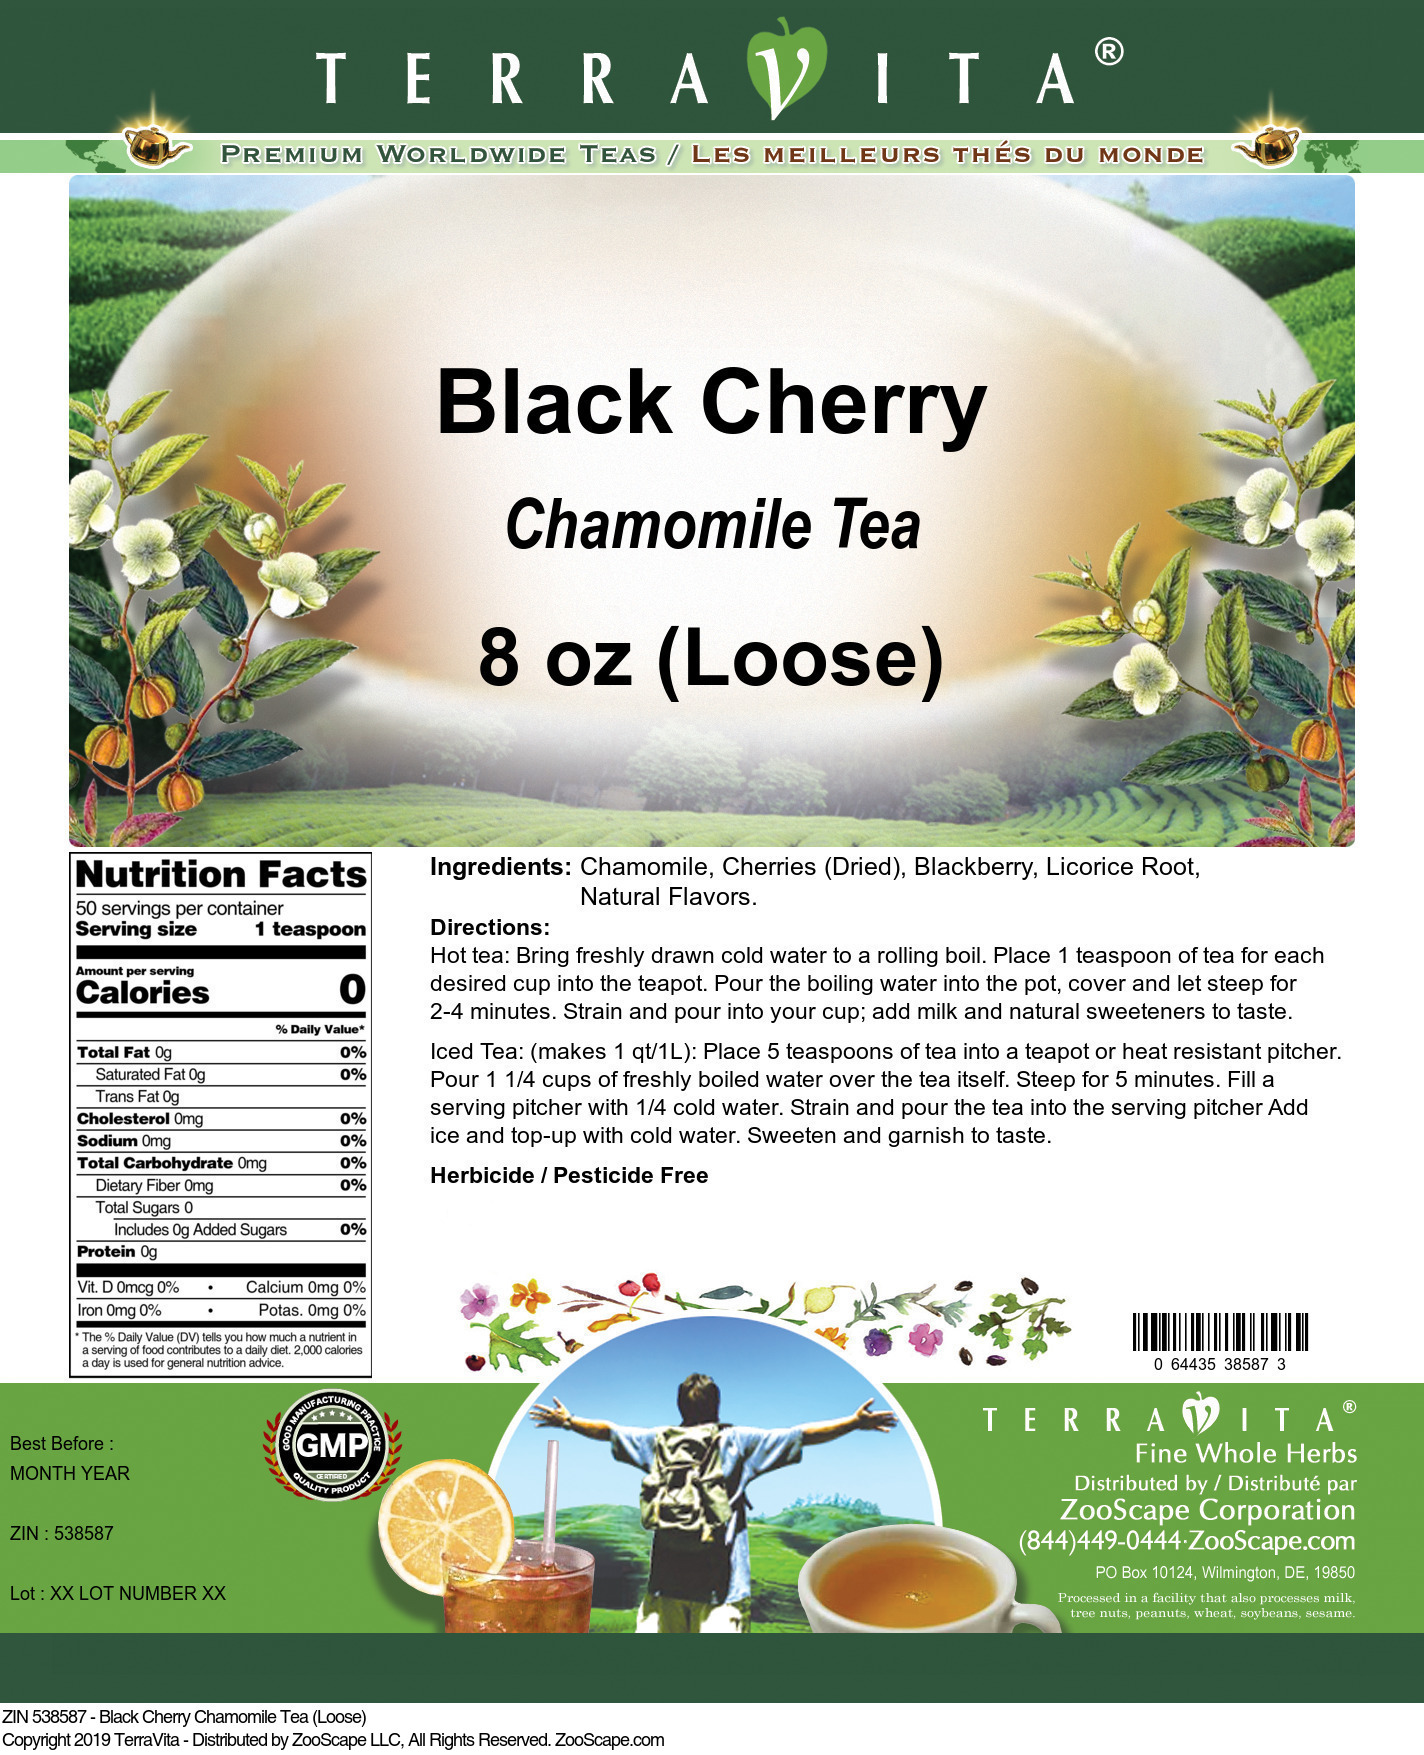 Black Cherry Chamomile Tea (Loose) - Label